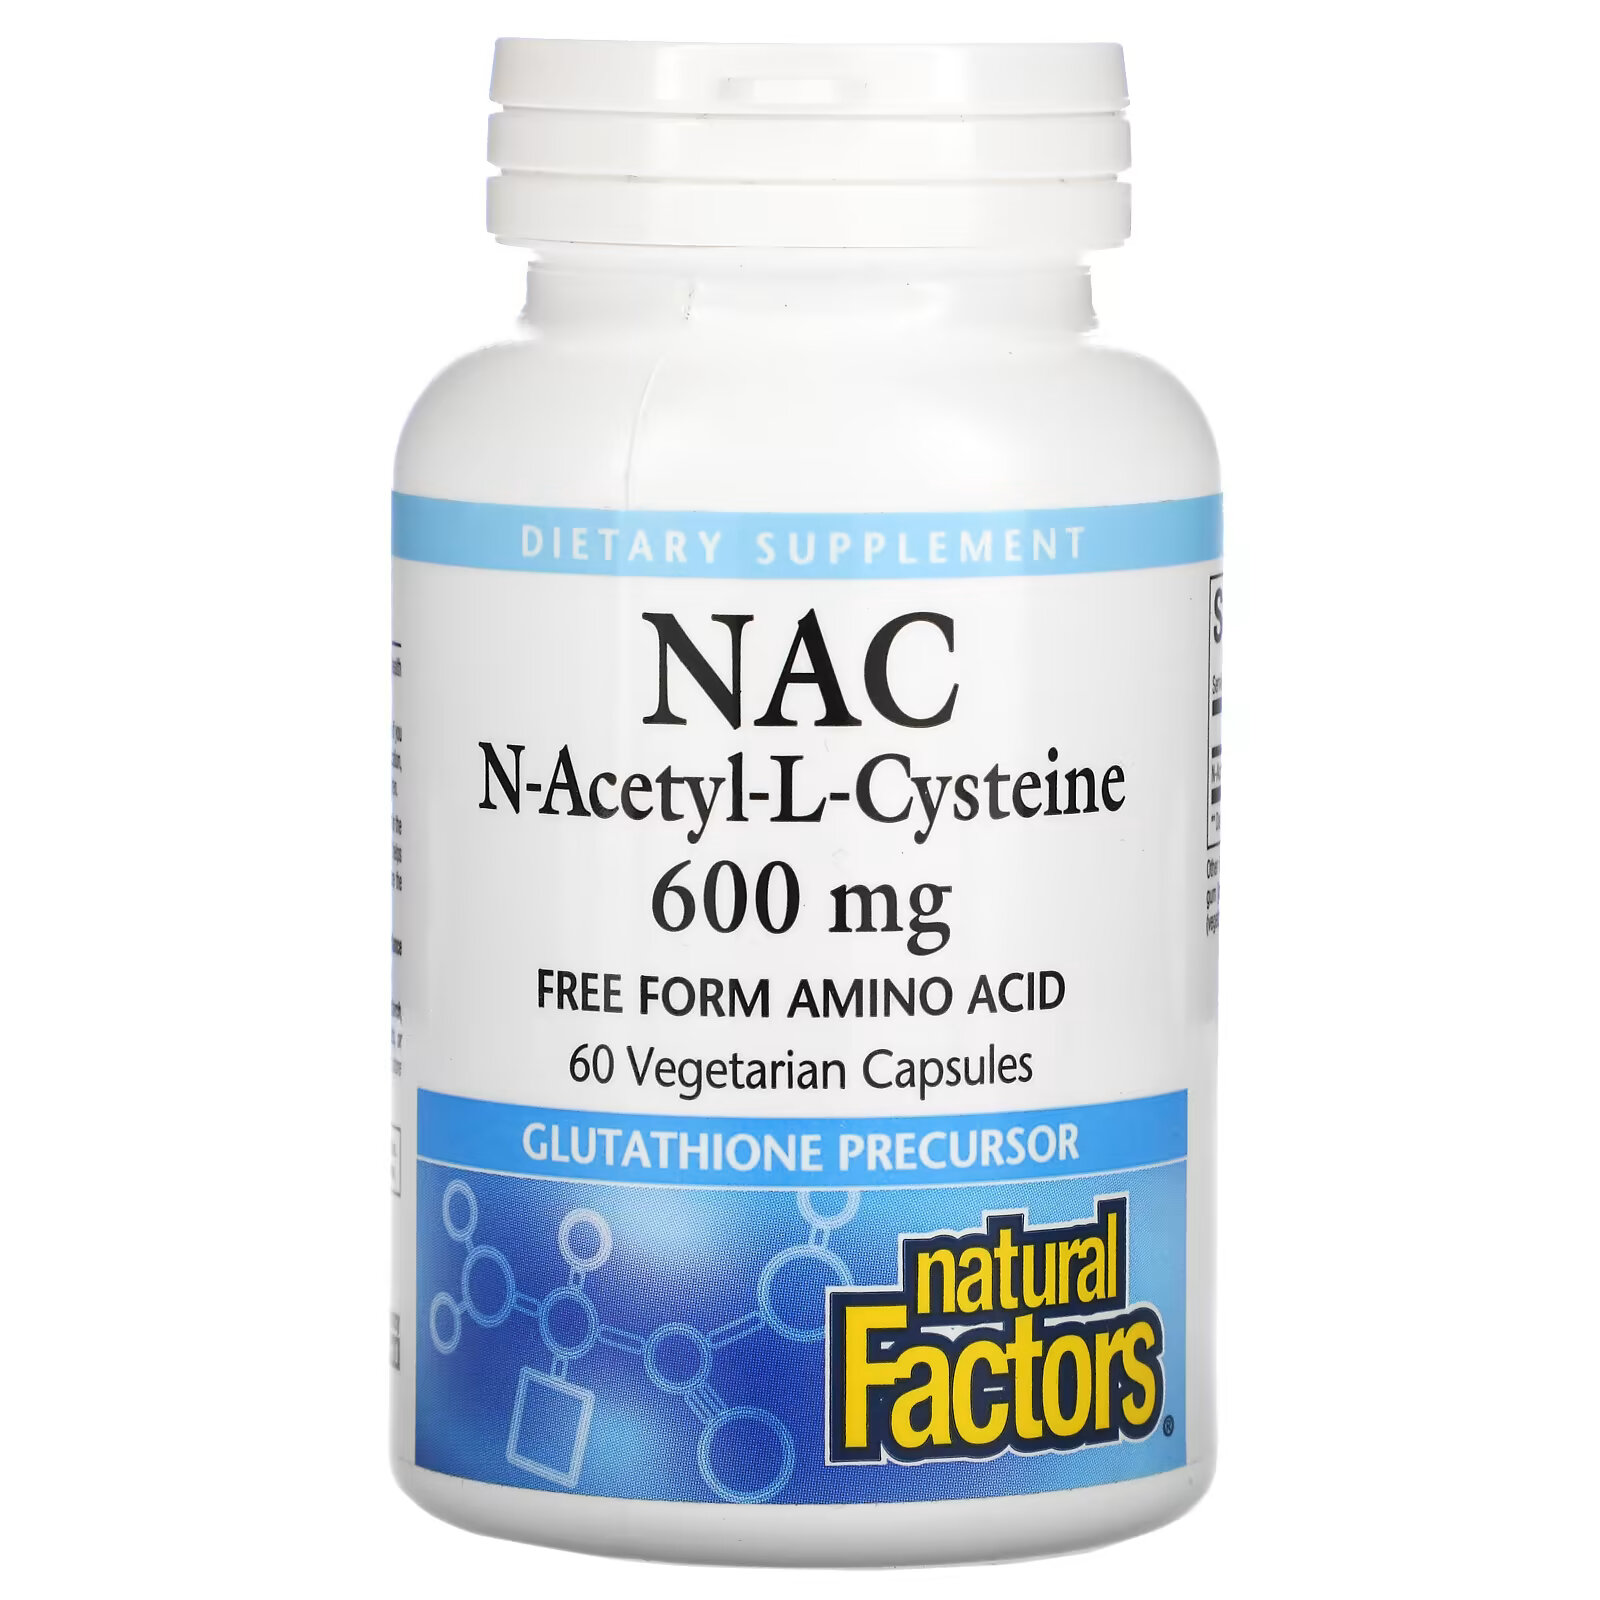 life extension n ацетил l цистеин 600 мг 60 капсул Natural Factors, NAC N-ацетил-L цистеин, 600 мг, 60 вегетарианских капсул